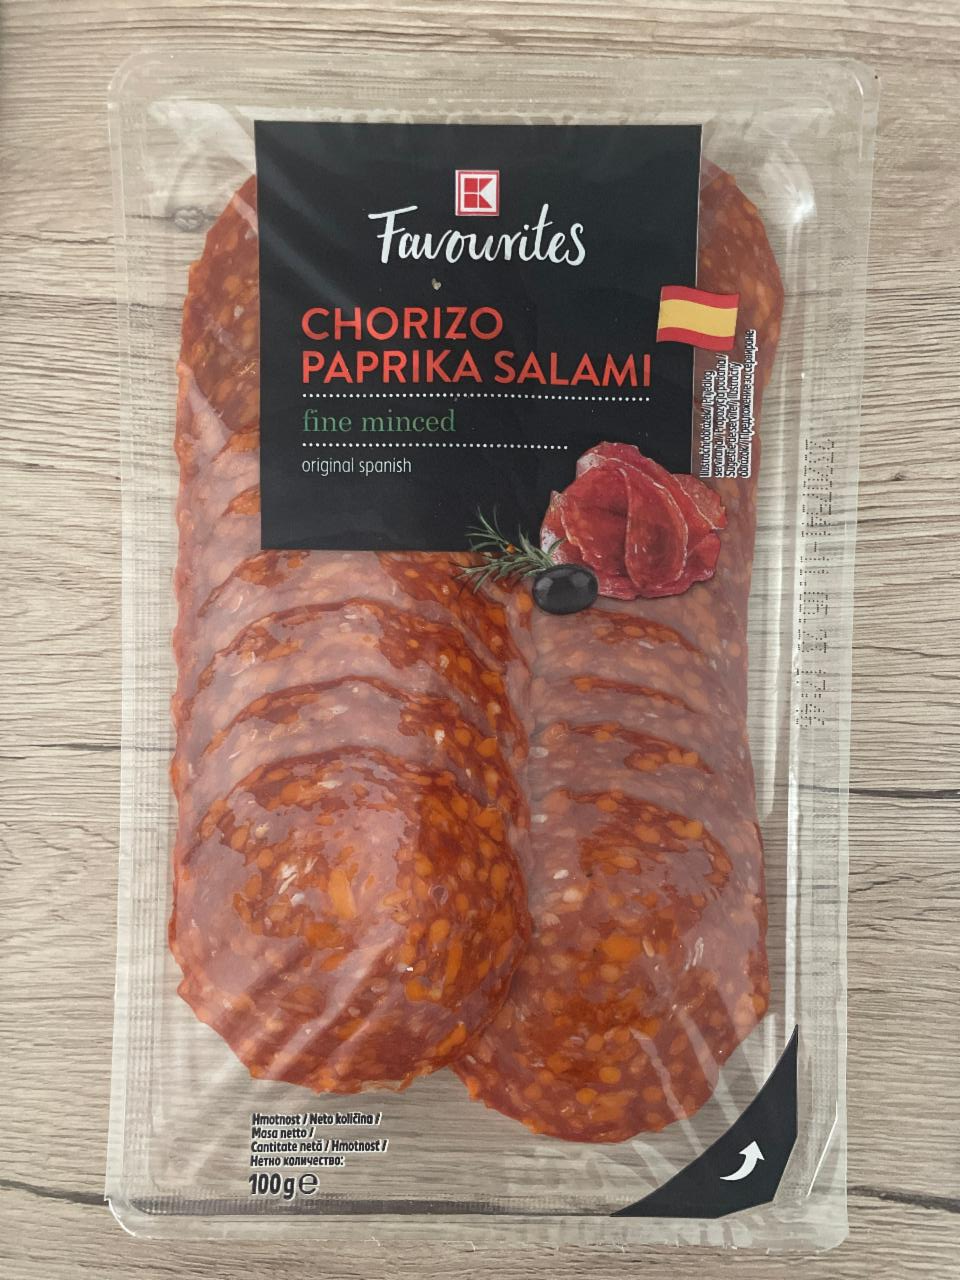 Fotografie - Chorizo paprika salami K-Favourites